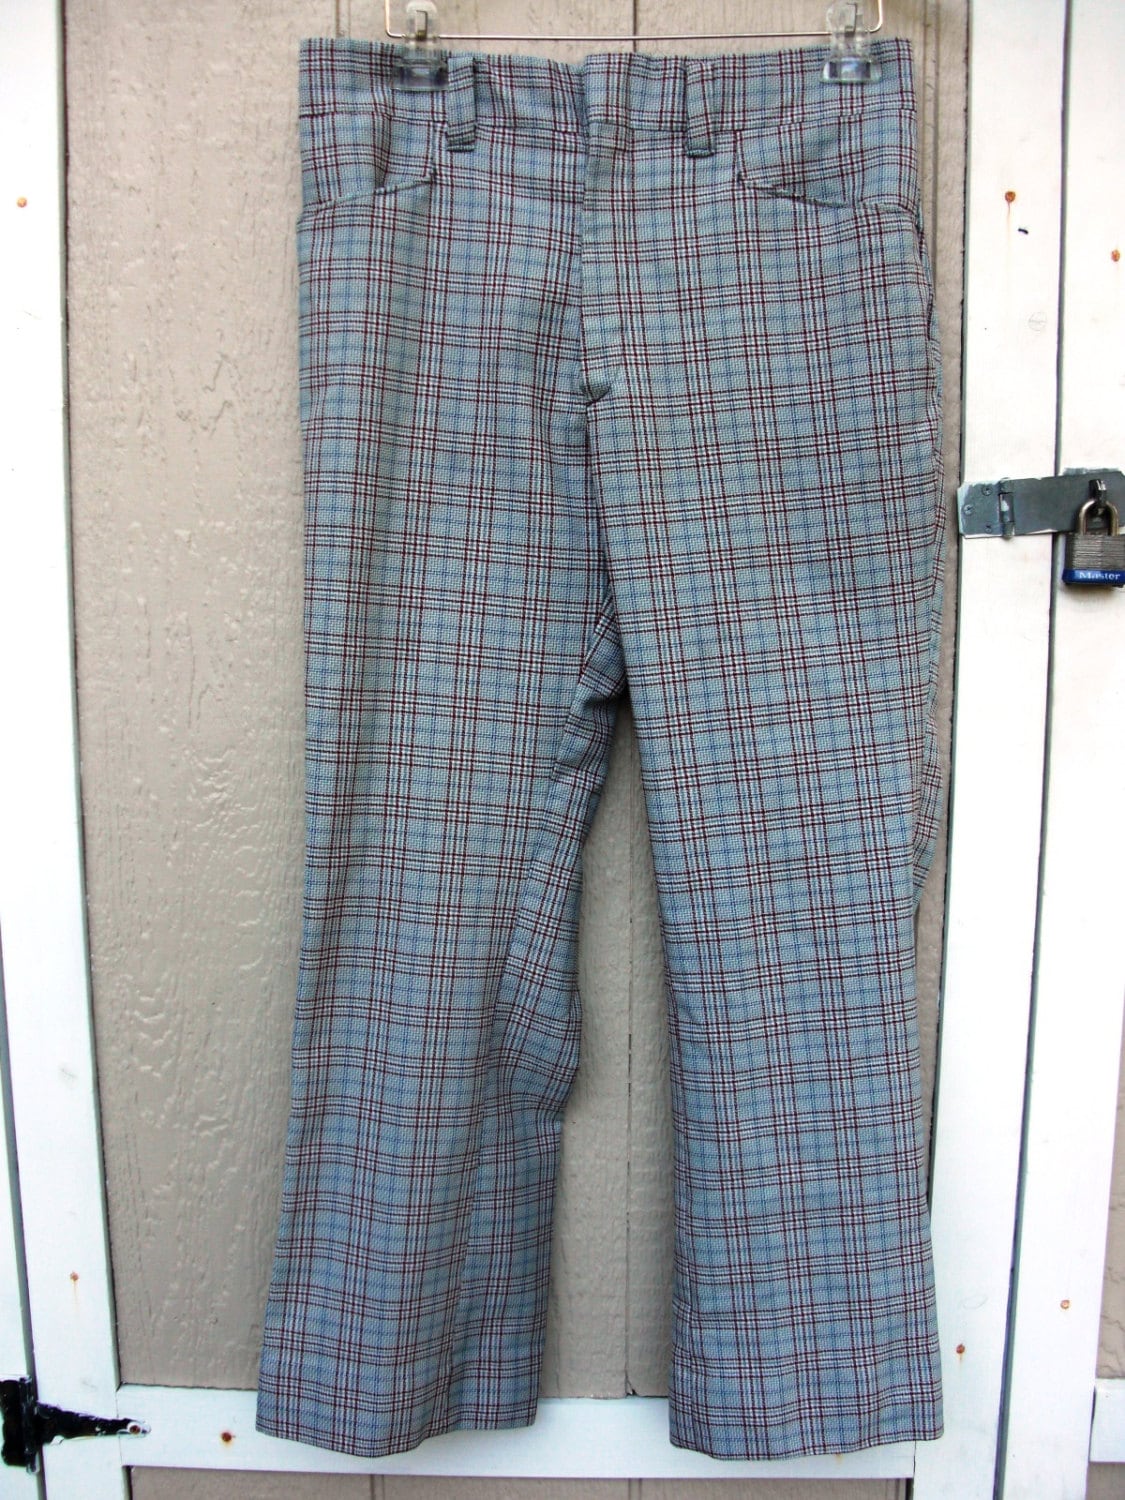 Mens 70s Pants Vintage Pants Vintage Plaid by gottagovintage1